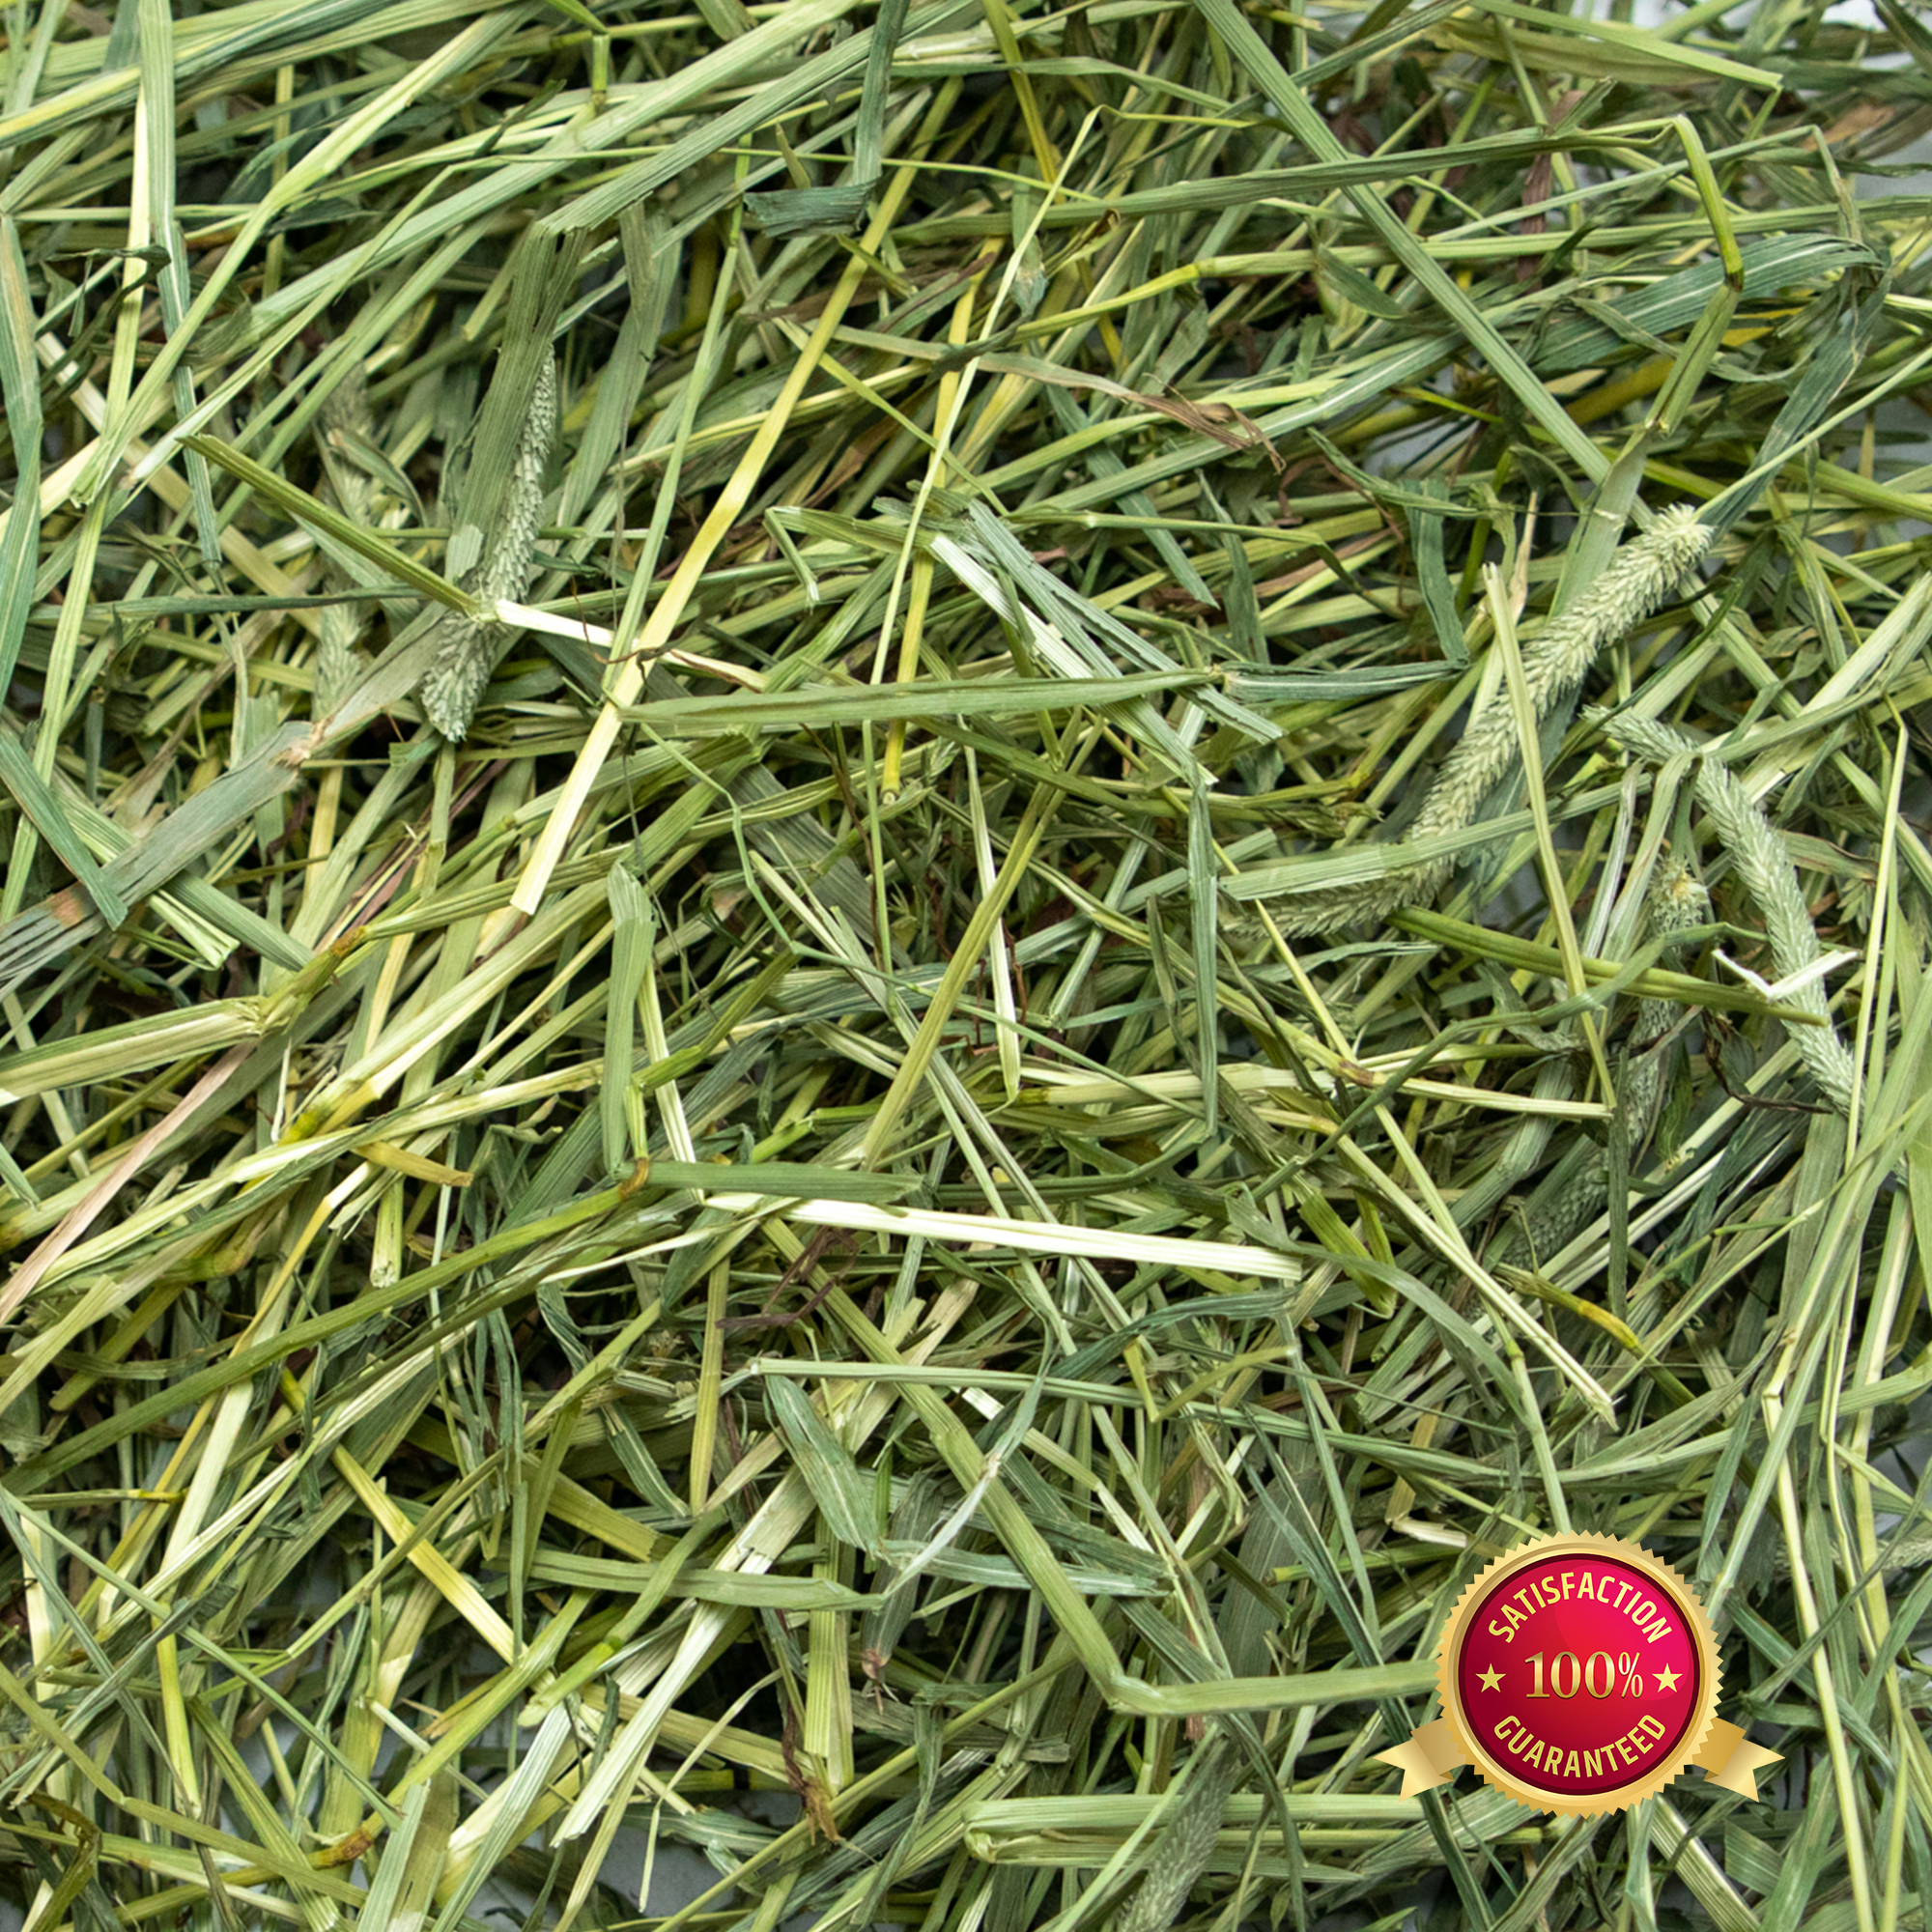 Rabbit Hole Hay, Ultra Premium Coarse Timothy Hay; 10lb box - image 2 of 2